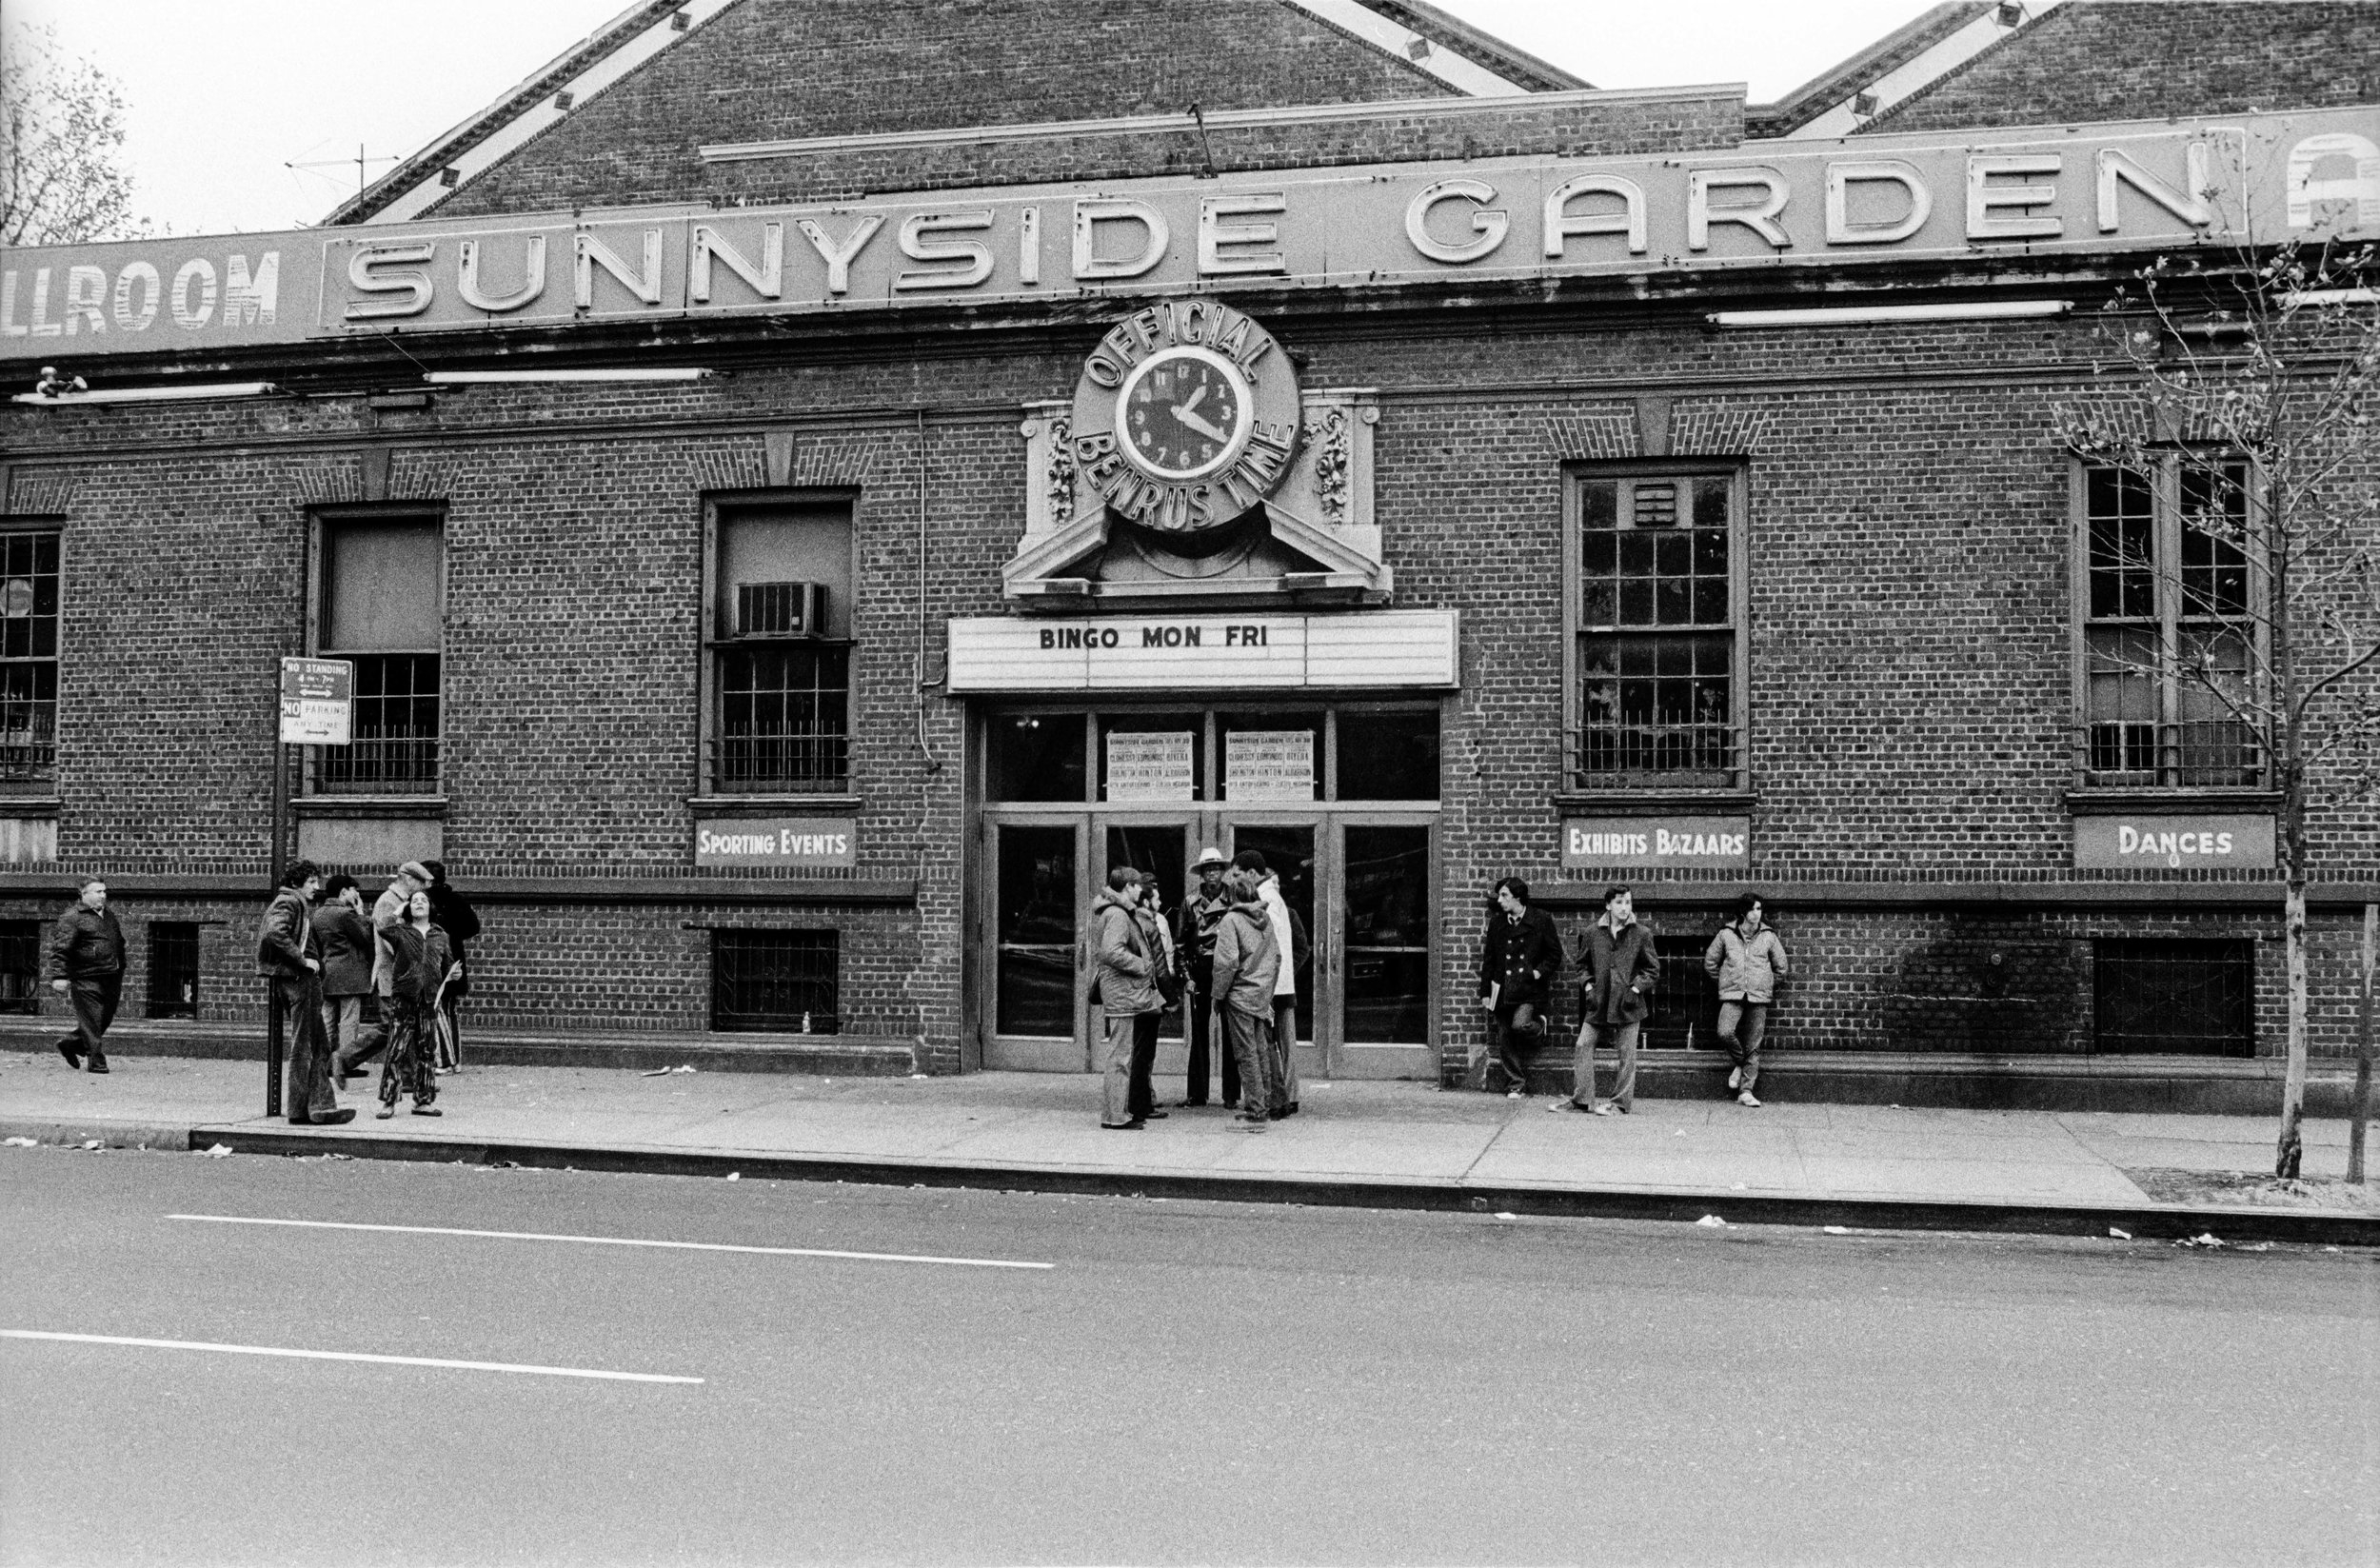   Sunnyside, Queens, NY, 1971  